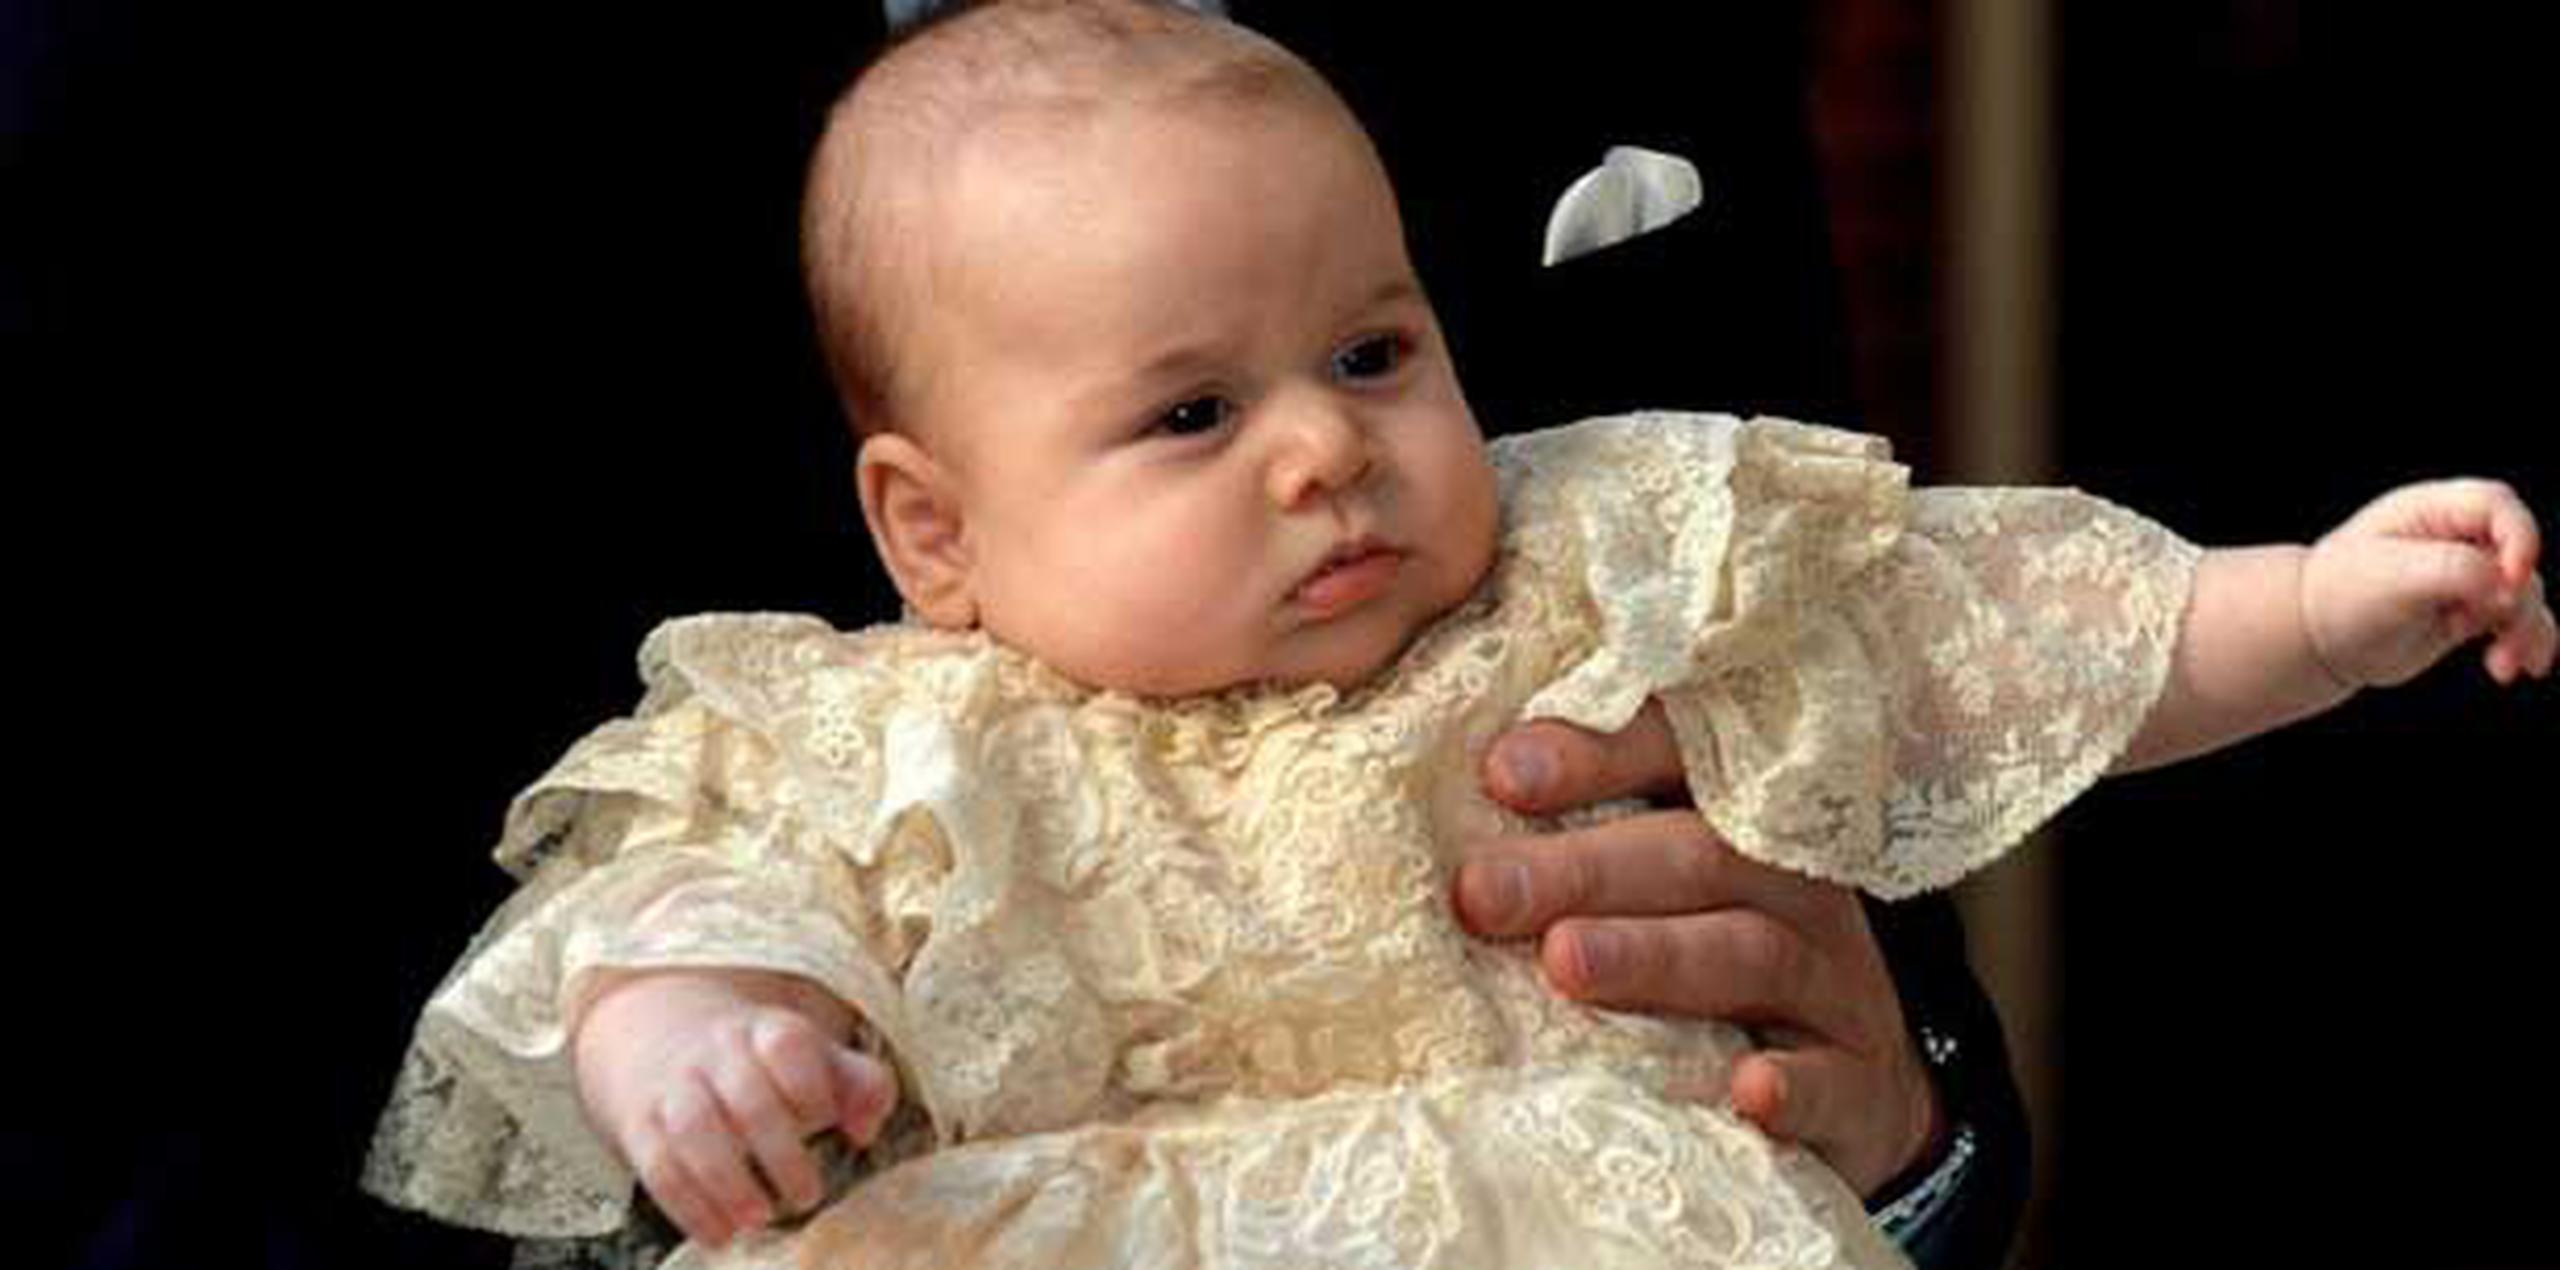 Un periódico llamó a Jorge "el bebé perfecto".  (AFP/Archivo/John Stillwell)